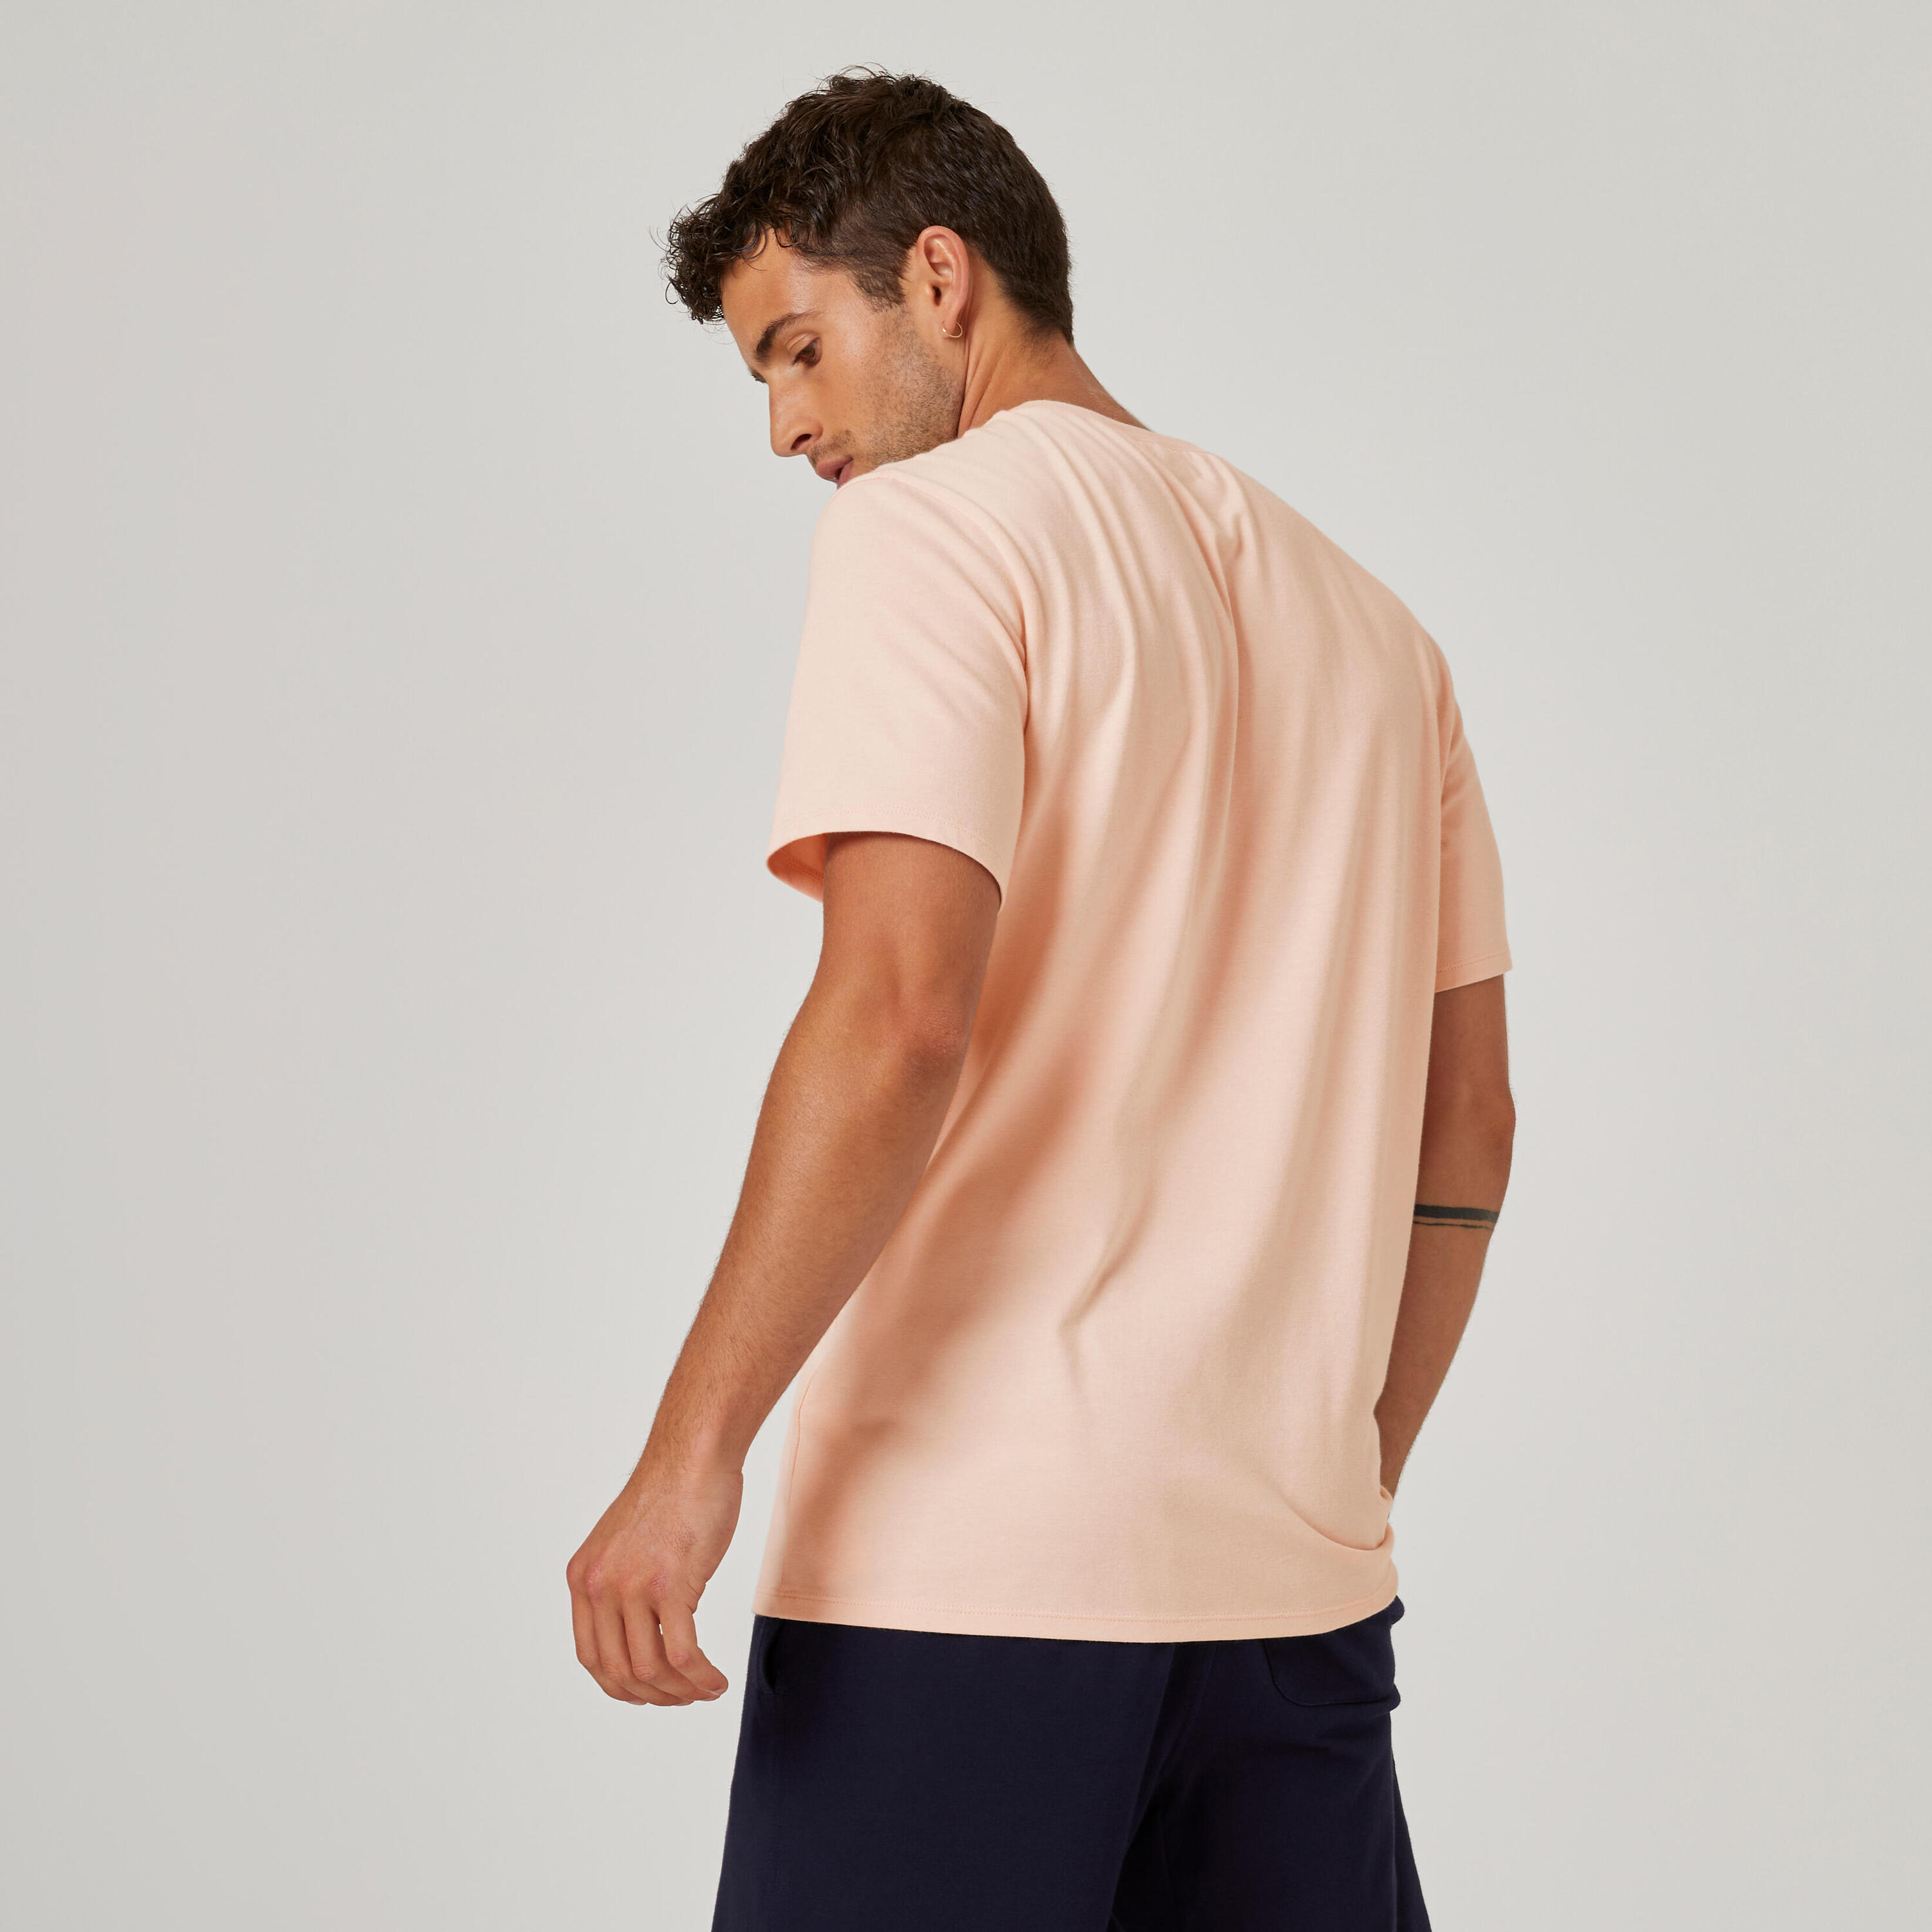 Men's Short-Sleeved Straight-Cut Crew Neck Cotton Fitness T-Shirt 500 - Pink Print 2/6